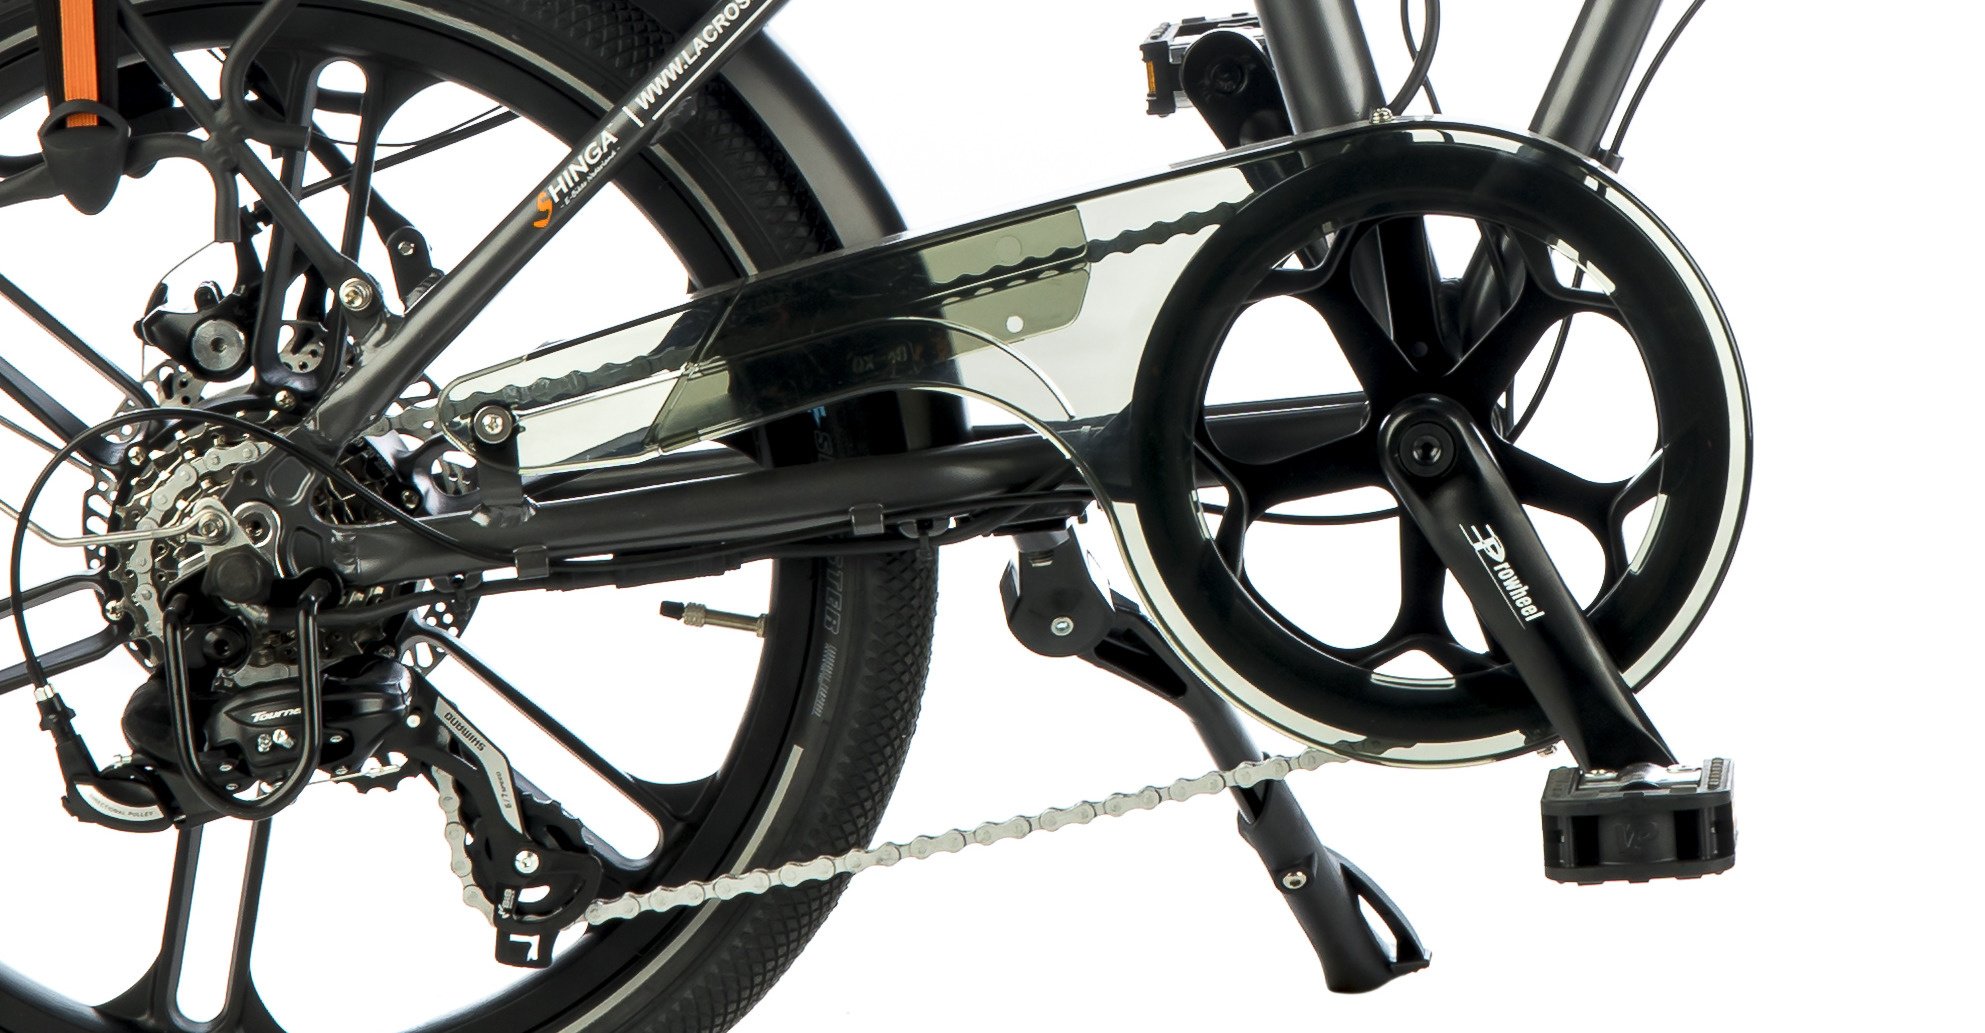 electric folding bike, lacros trotter t400, gray